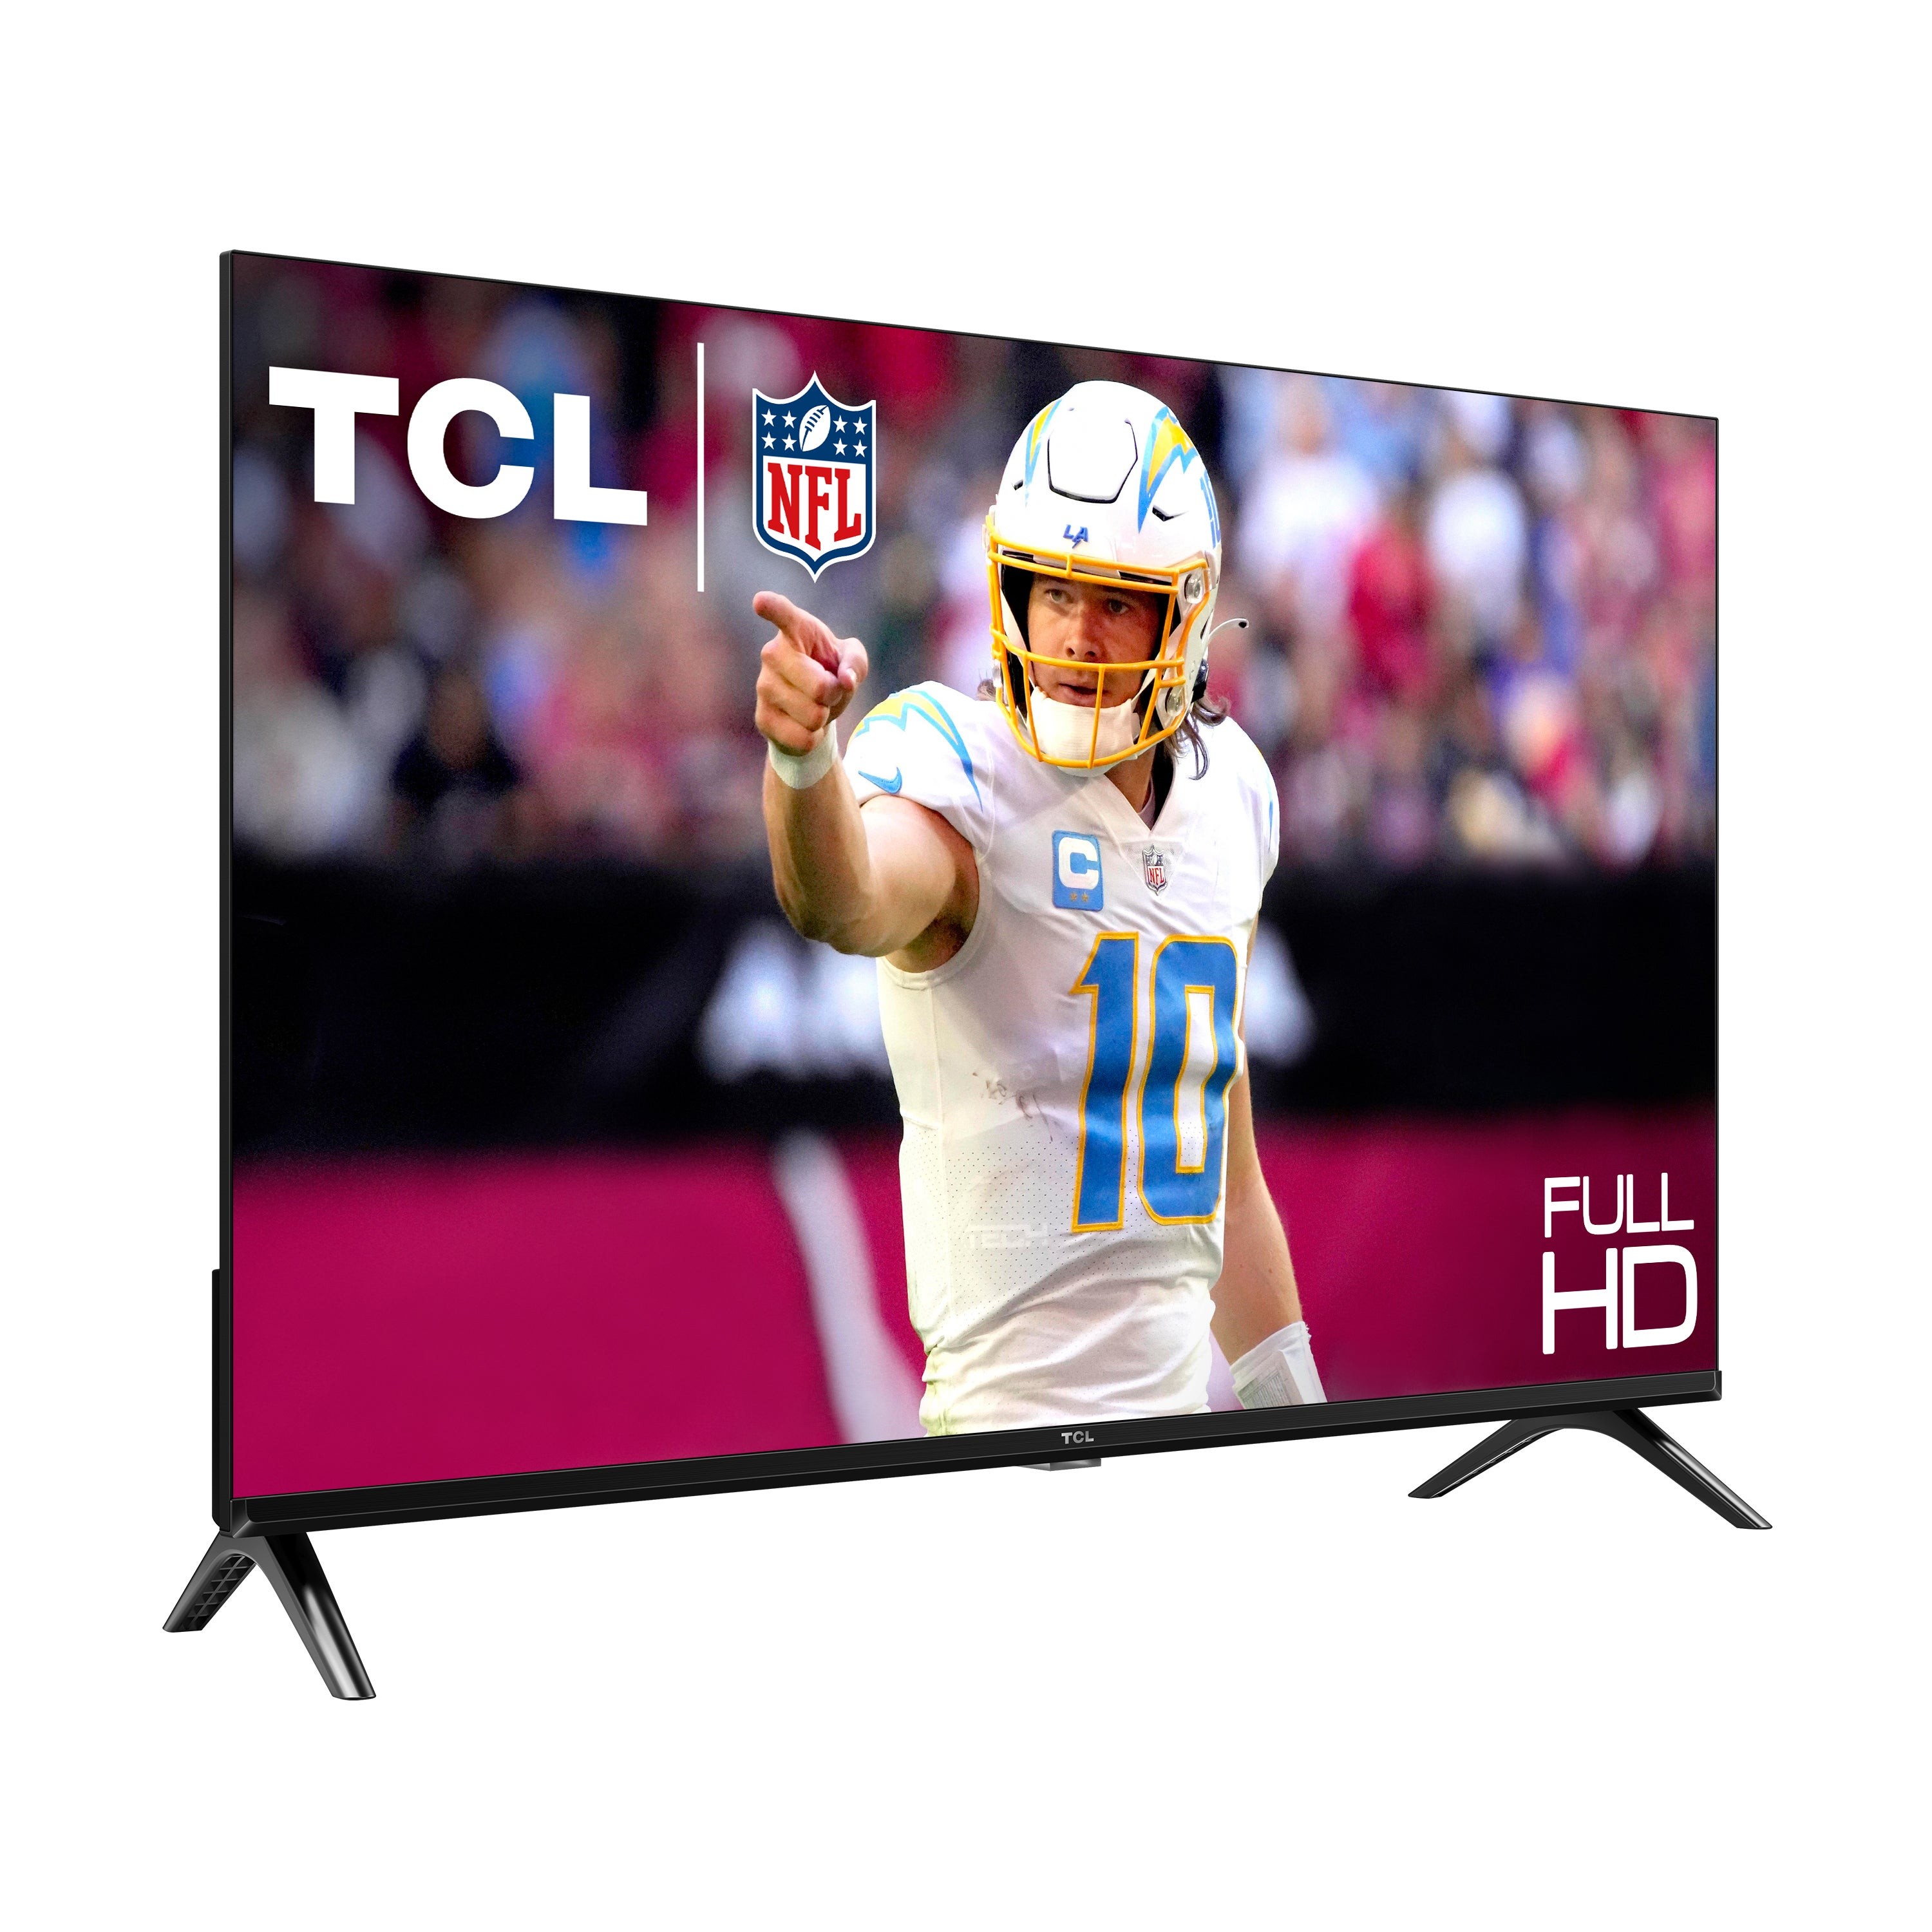 40" S Class 1080p FHD HDR LED Smart TV w/ Google TV